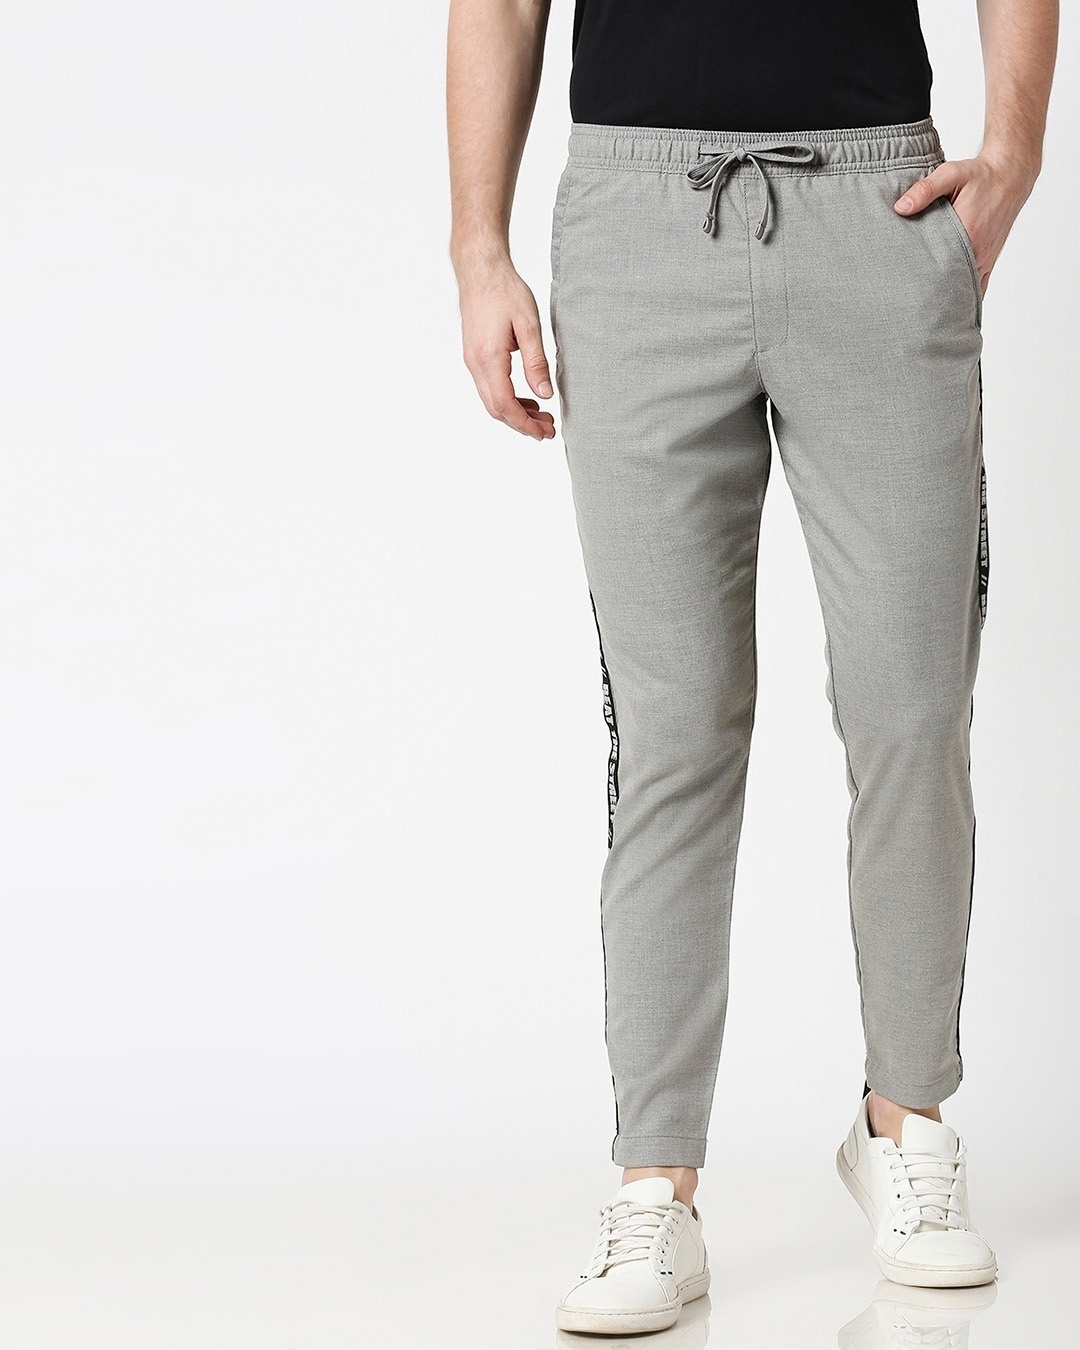 Buy Light Grey Men's Casual Pants for Men grey Online at Bewakoof